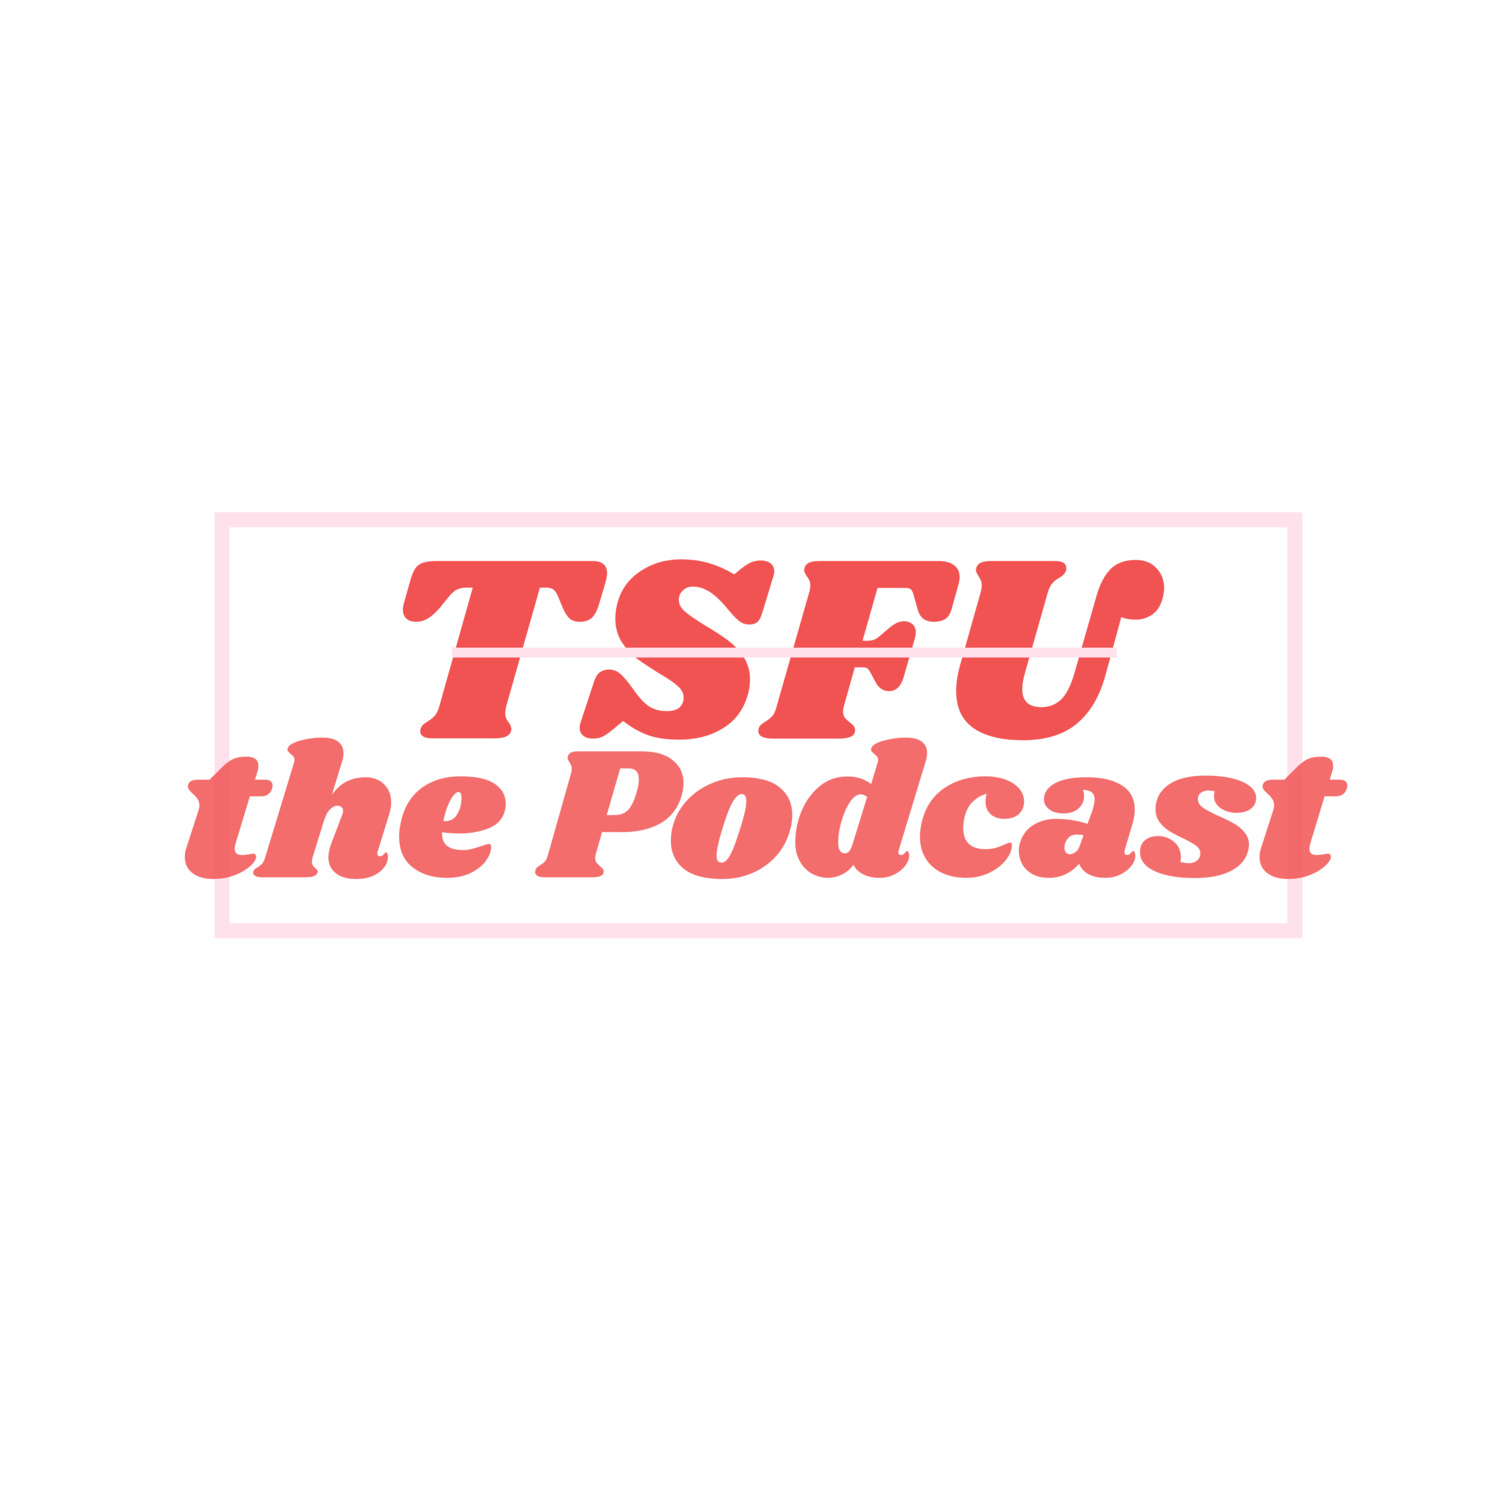 TSFU the Podcast